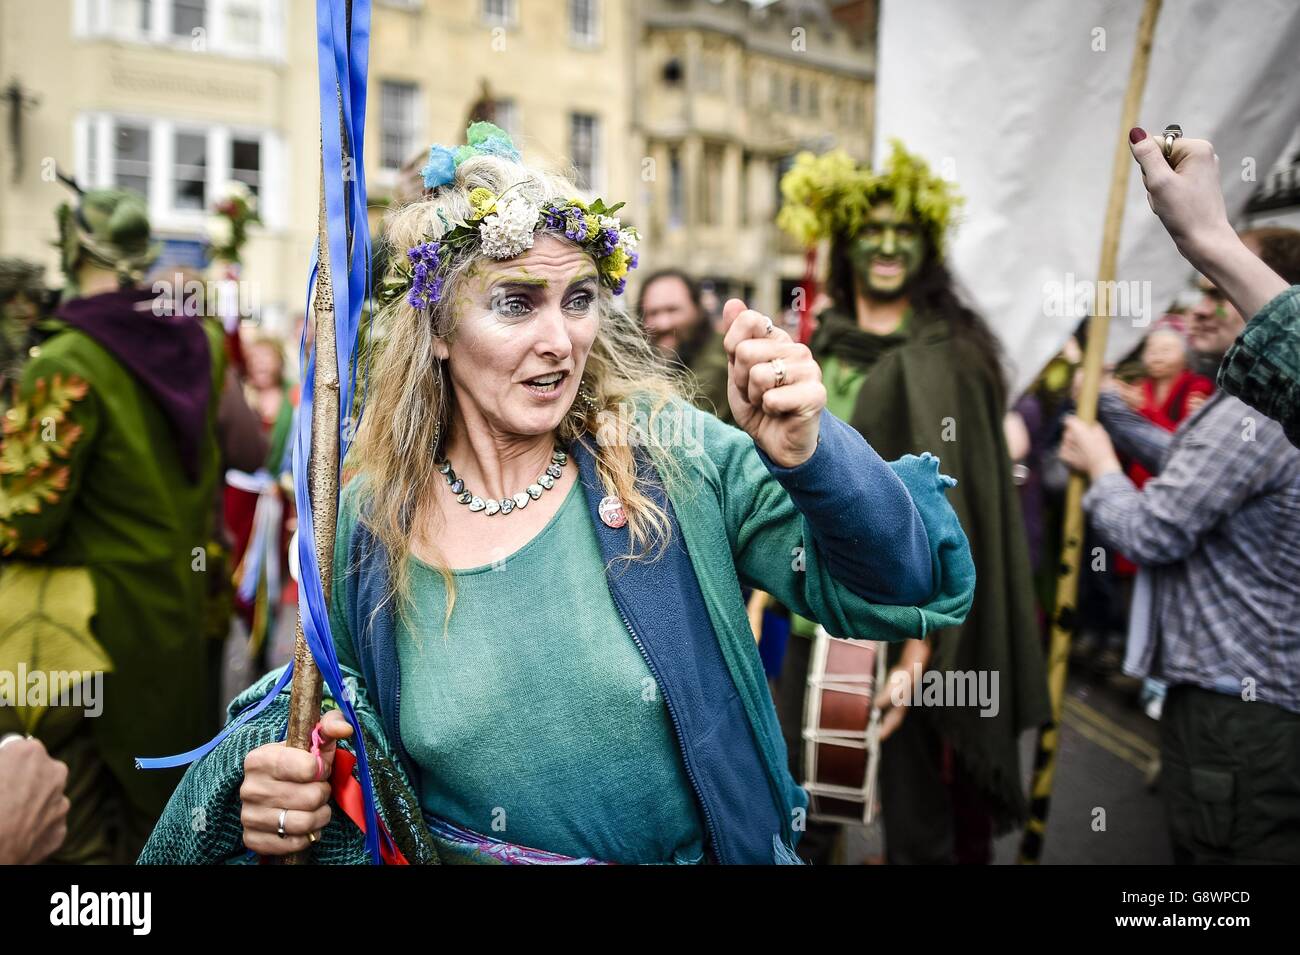 Glastonbury beltane celebrations hires stock photography and images